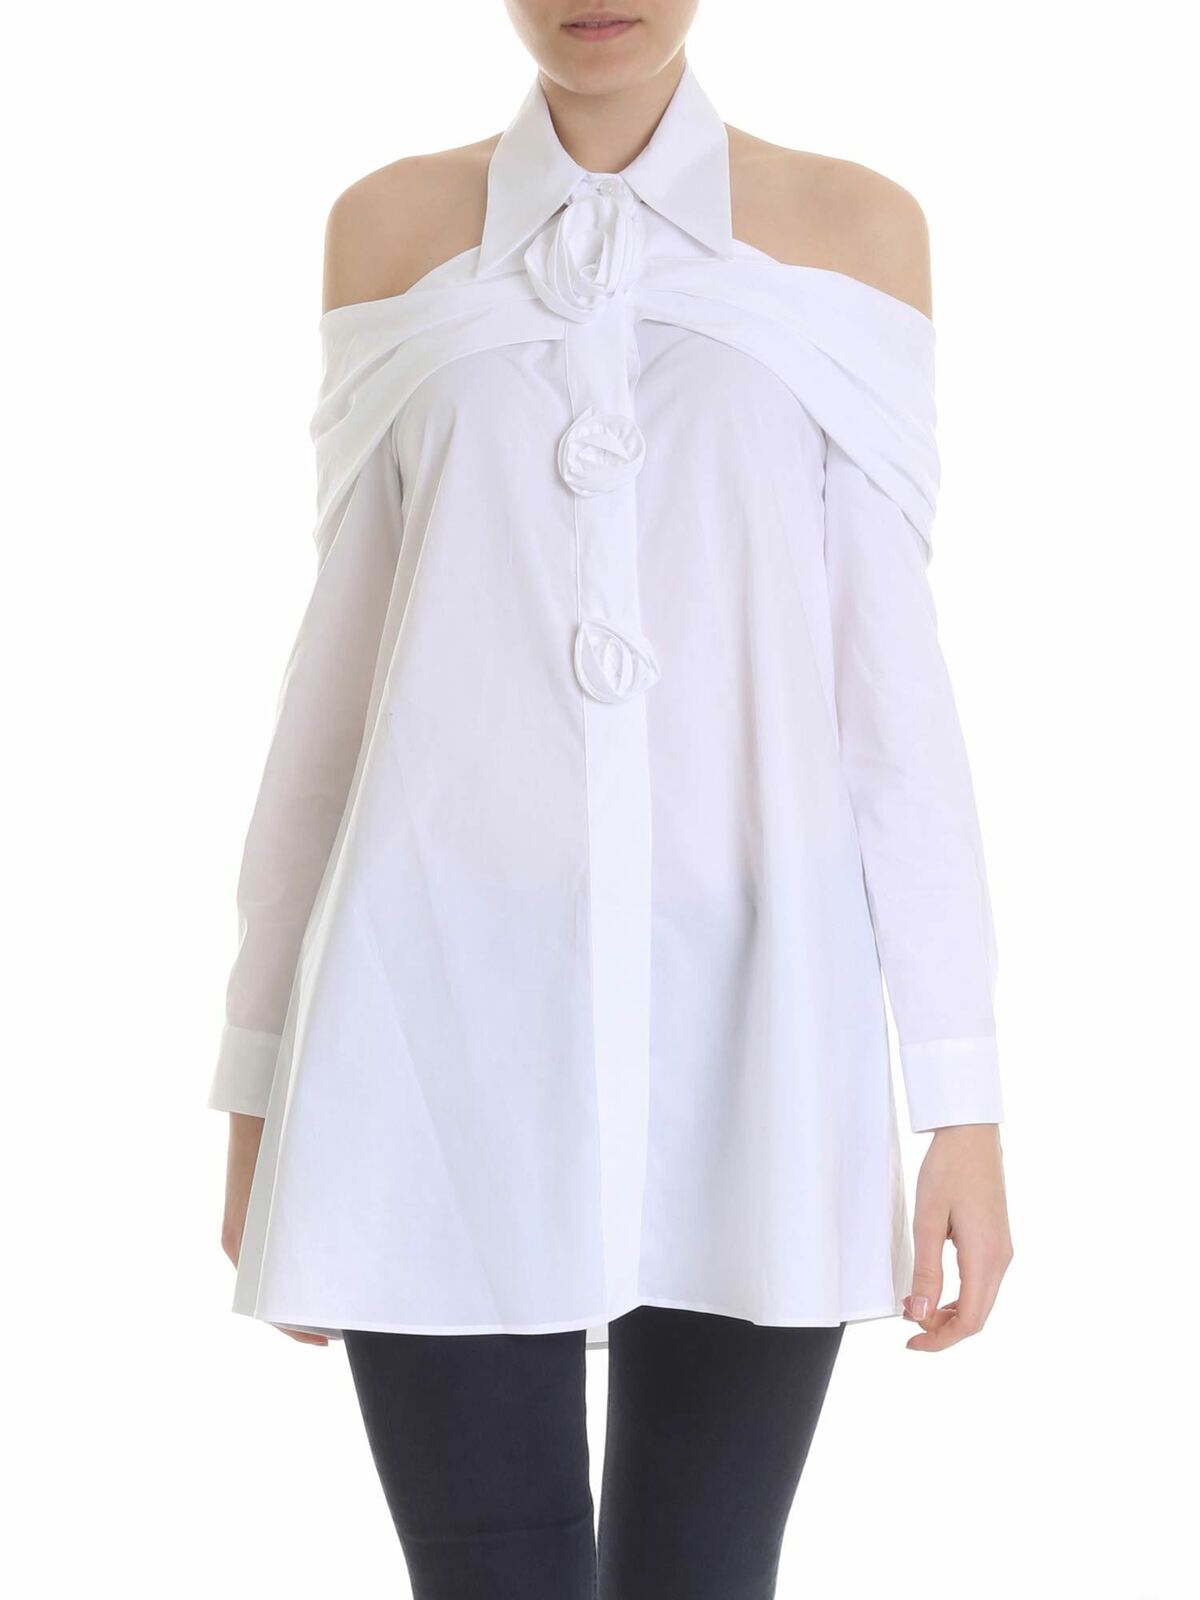 Vivetta Savigliano White Shirt With Rose Detail In Blanco